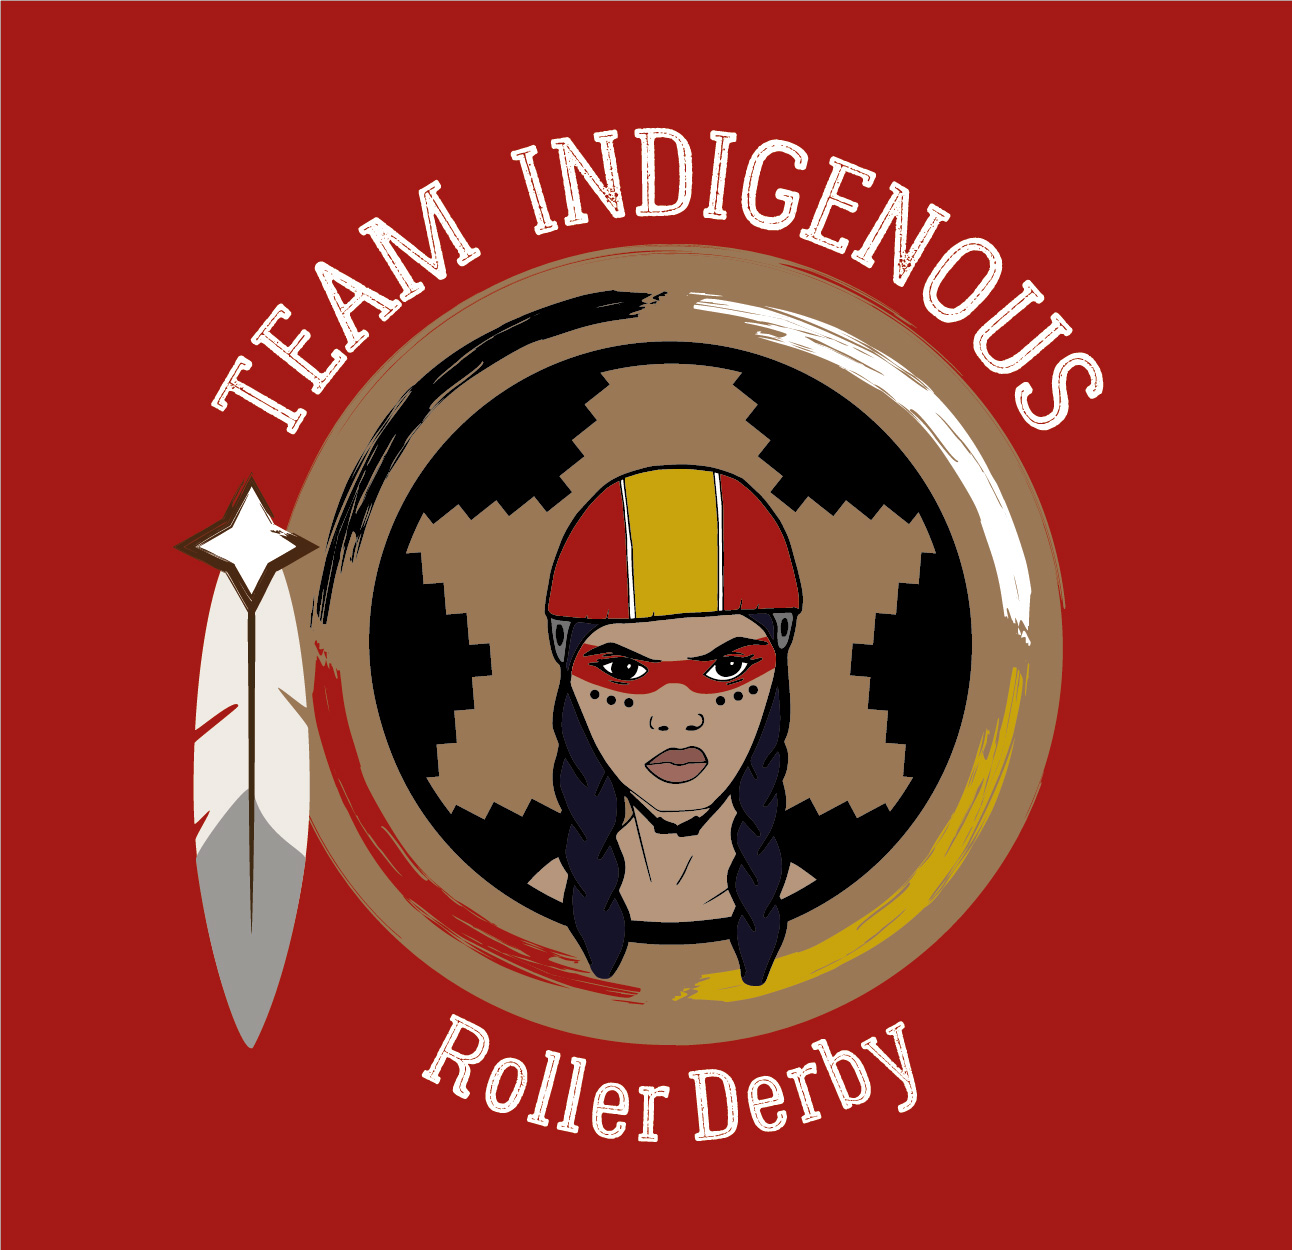 Team Indigenous